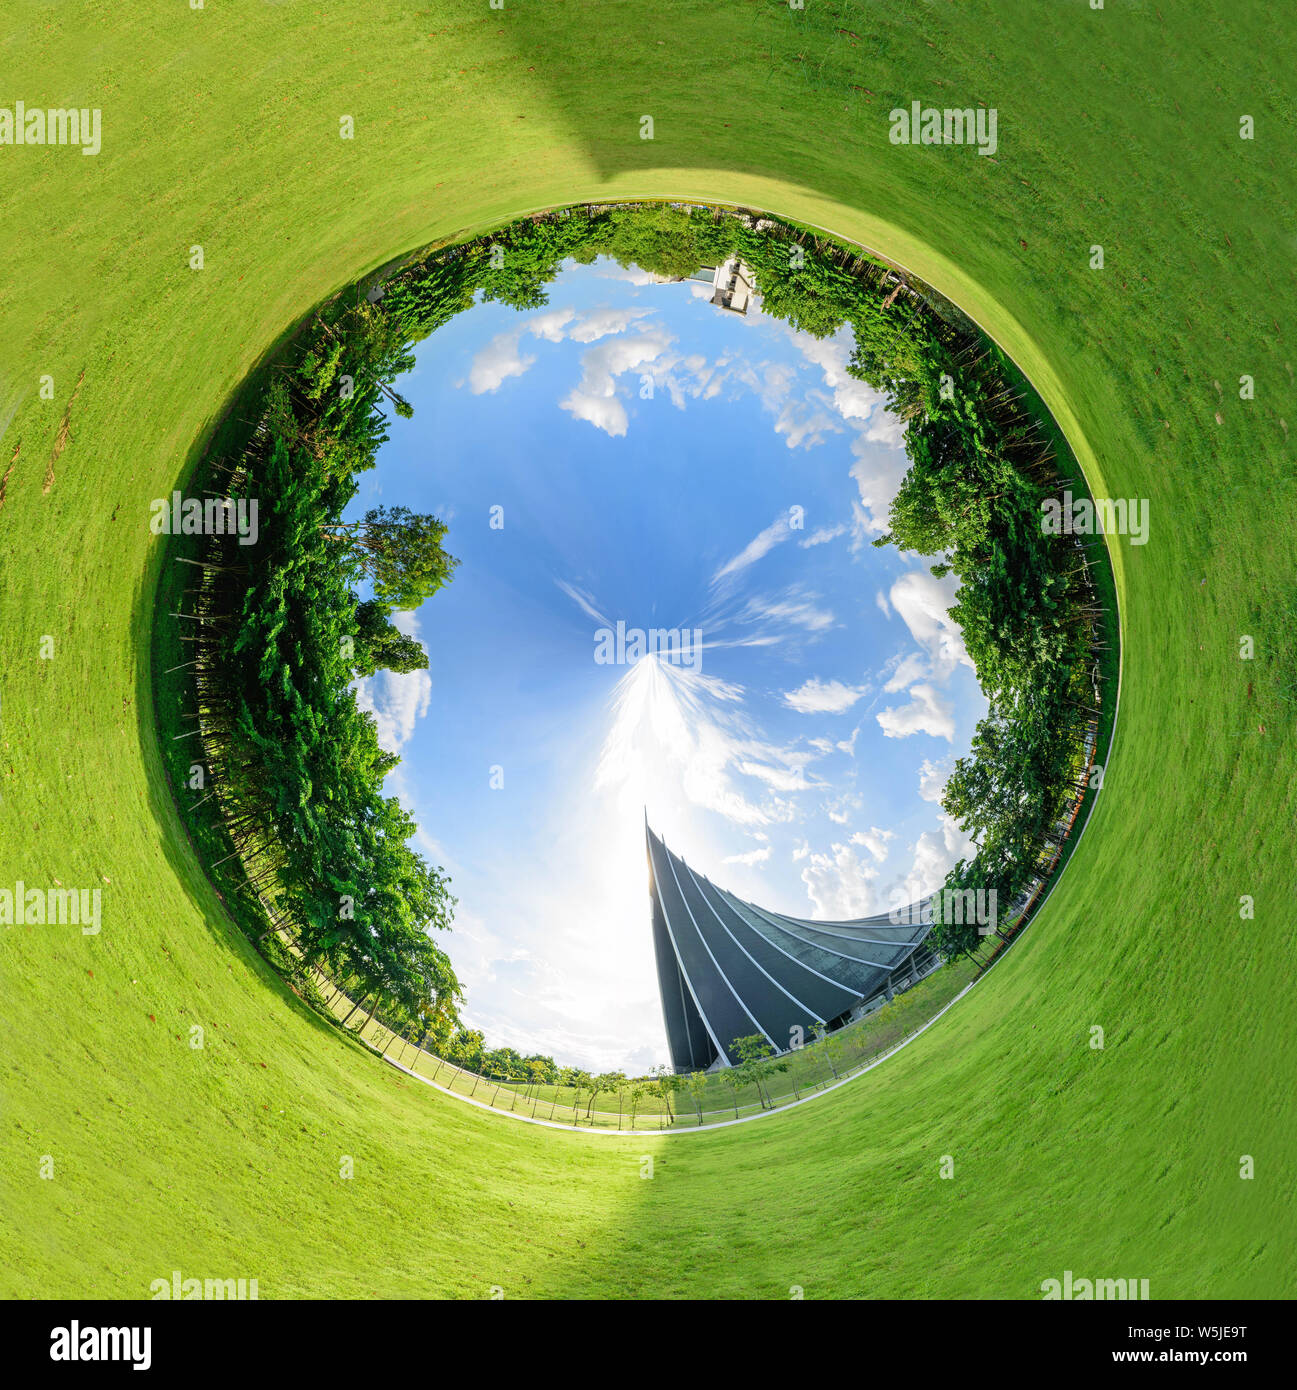 360 Panorama der grünen Park in Prinz Mahidol Hall Gebäude der Mahidol Universität Stockfoto